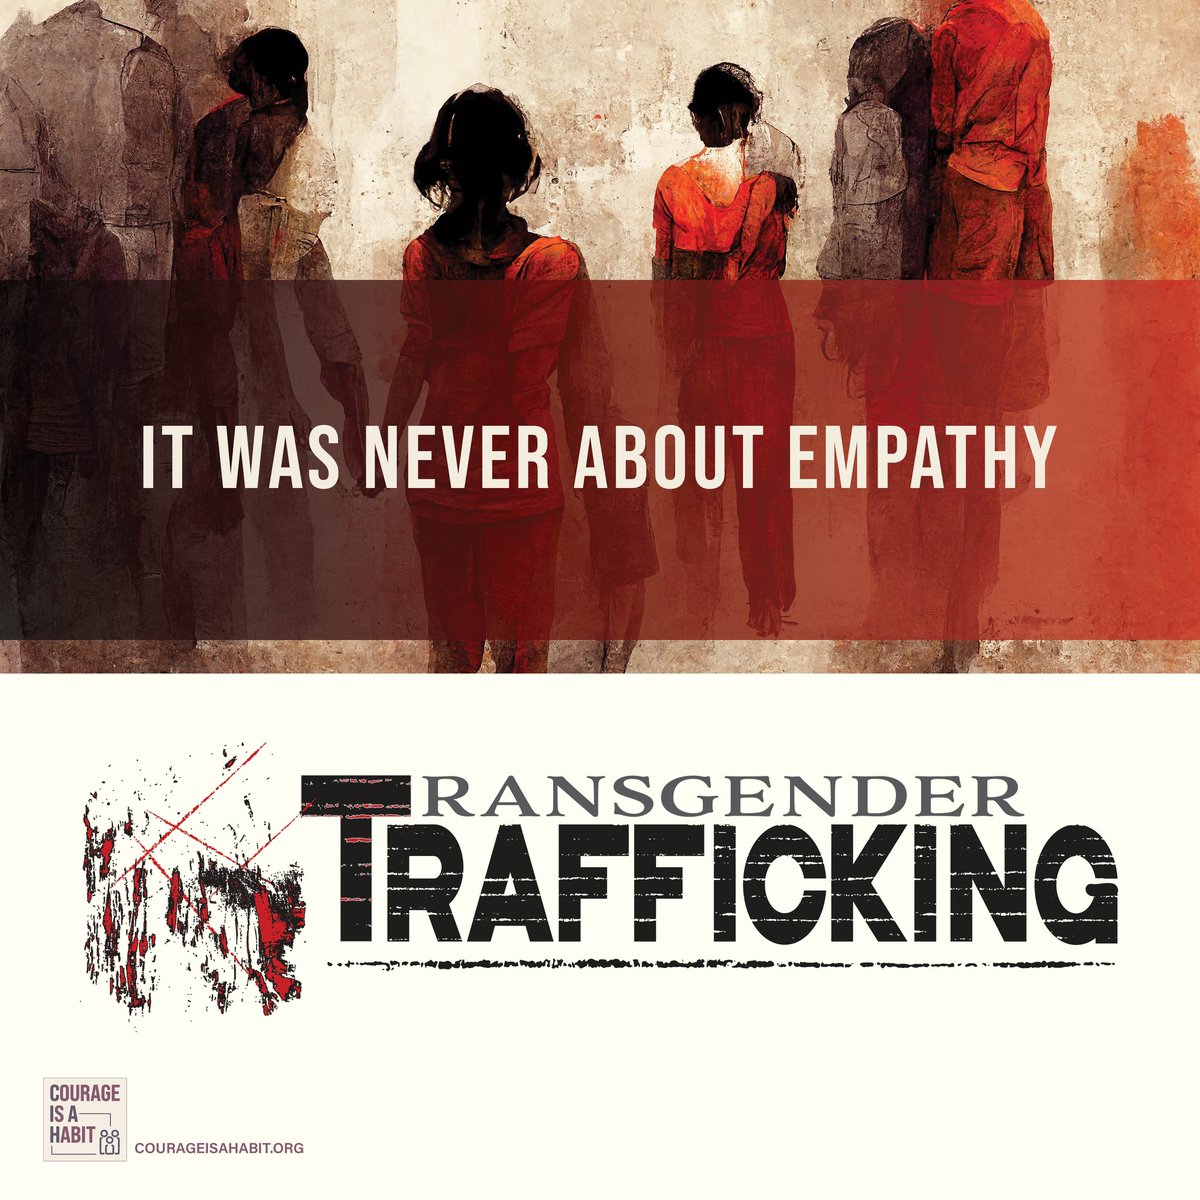 @libsoftiktok The similarities between Sex Trafficking and Transgender Trafficking.